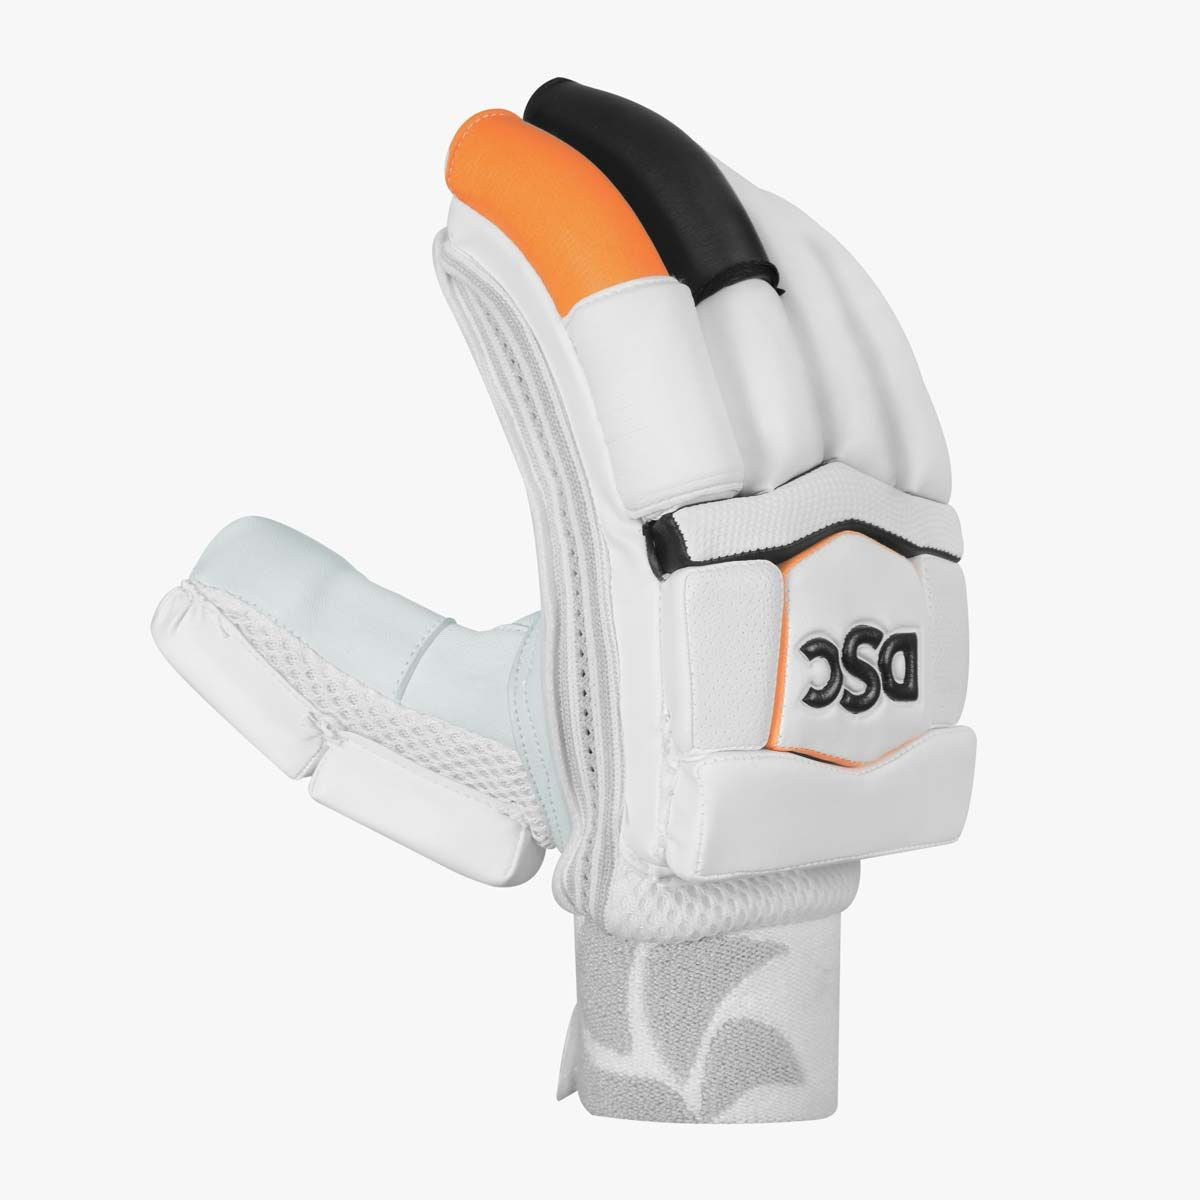 DSC Krunch 7.0 Cricket Batting Gloves